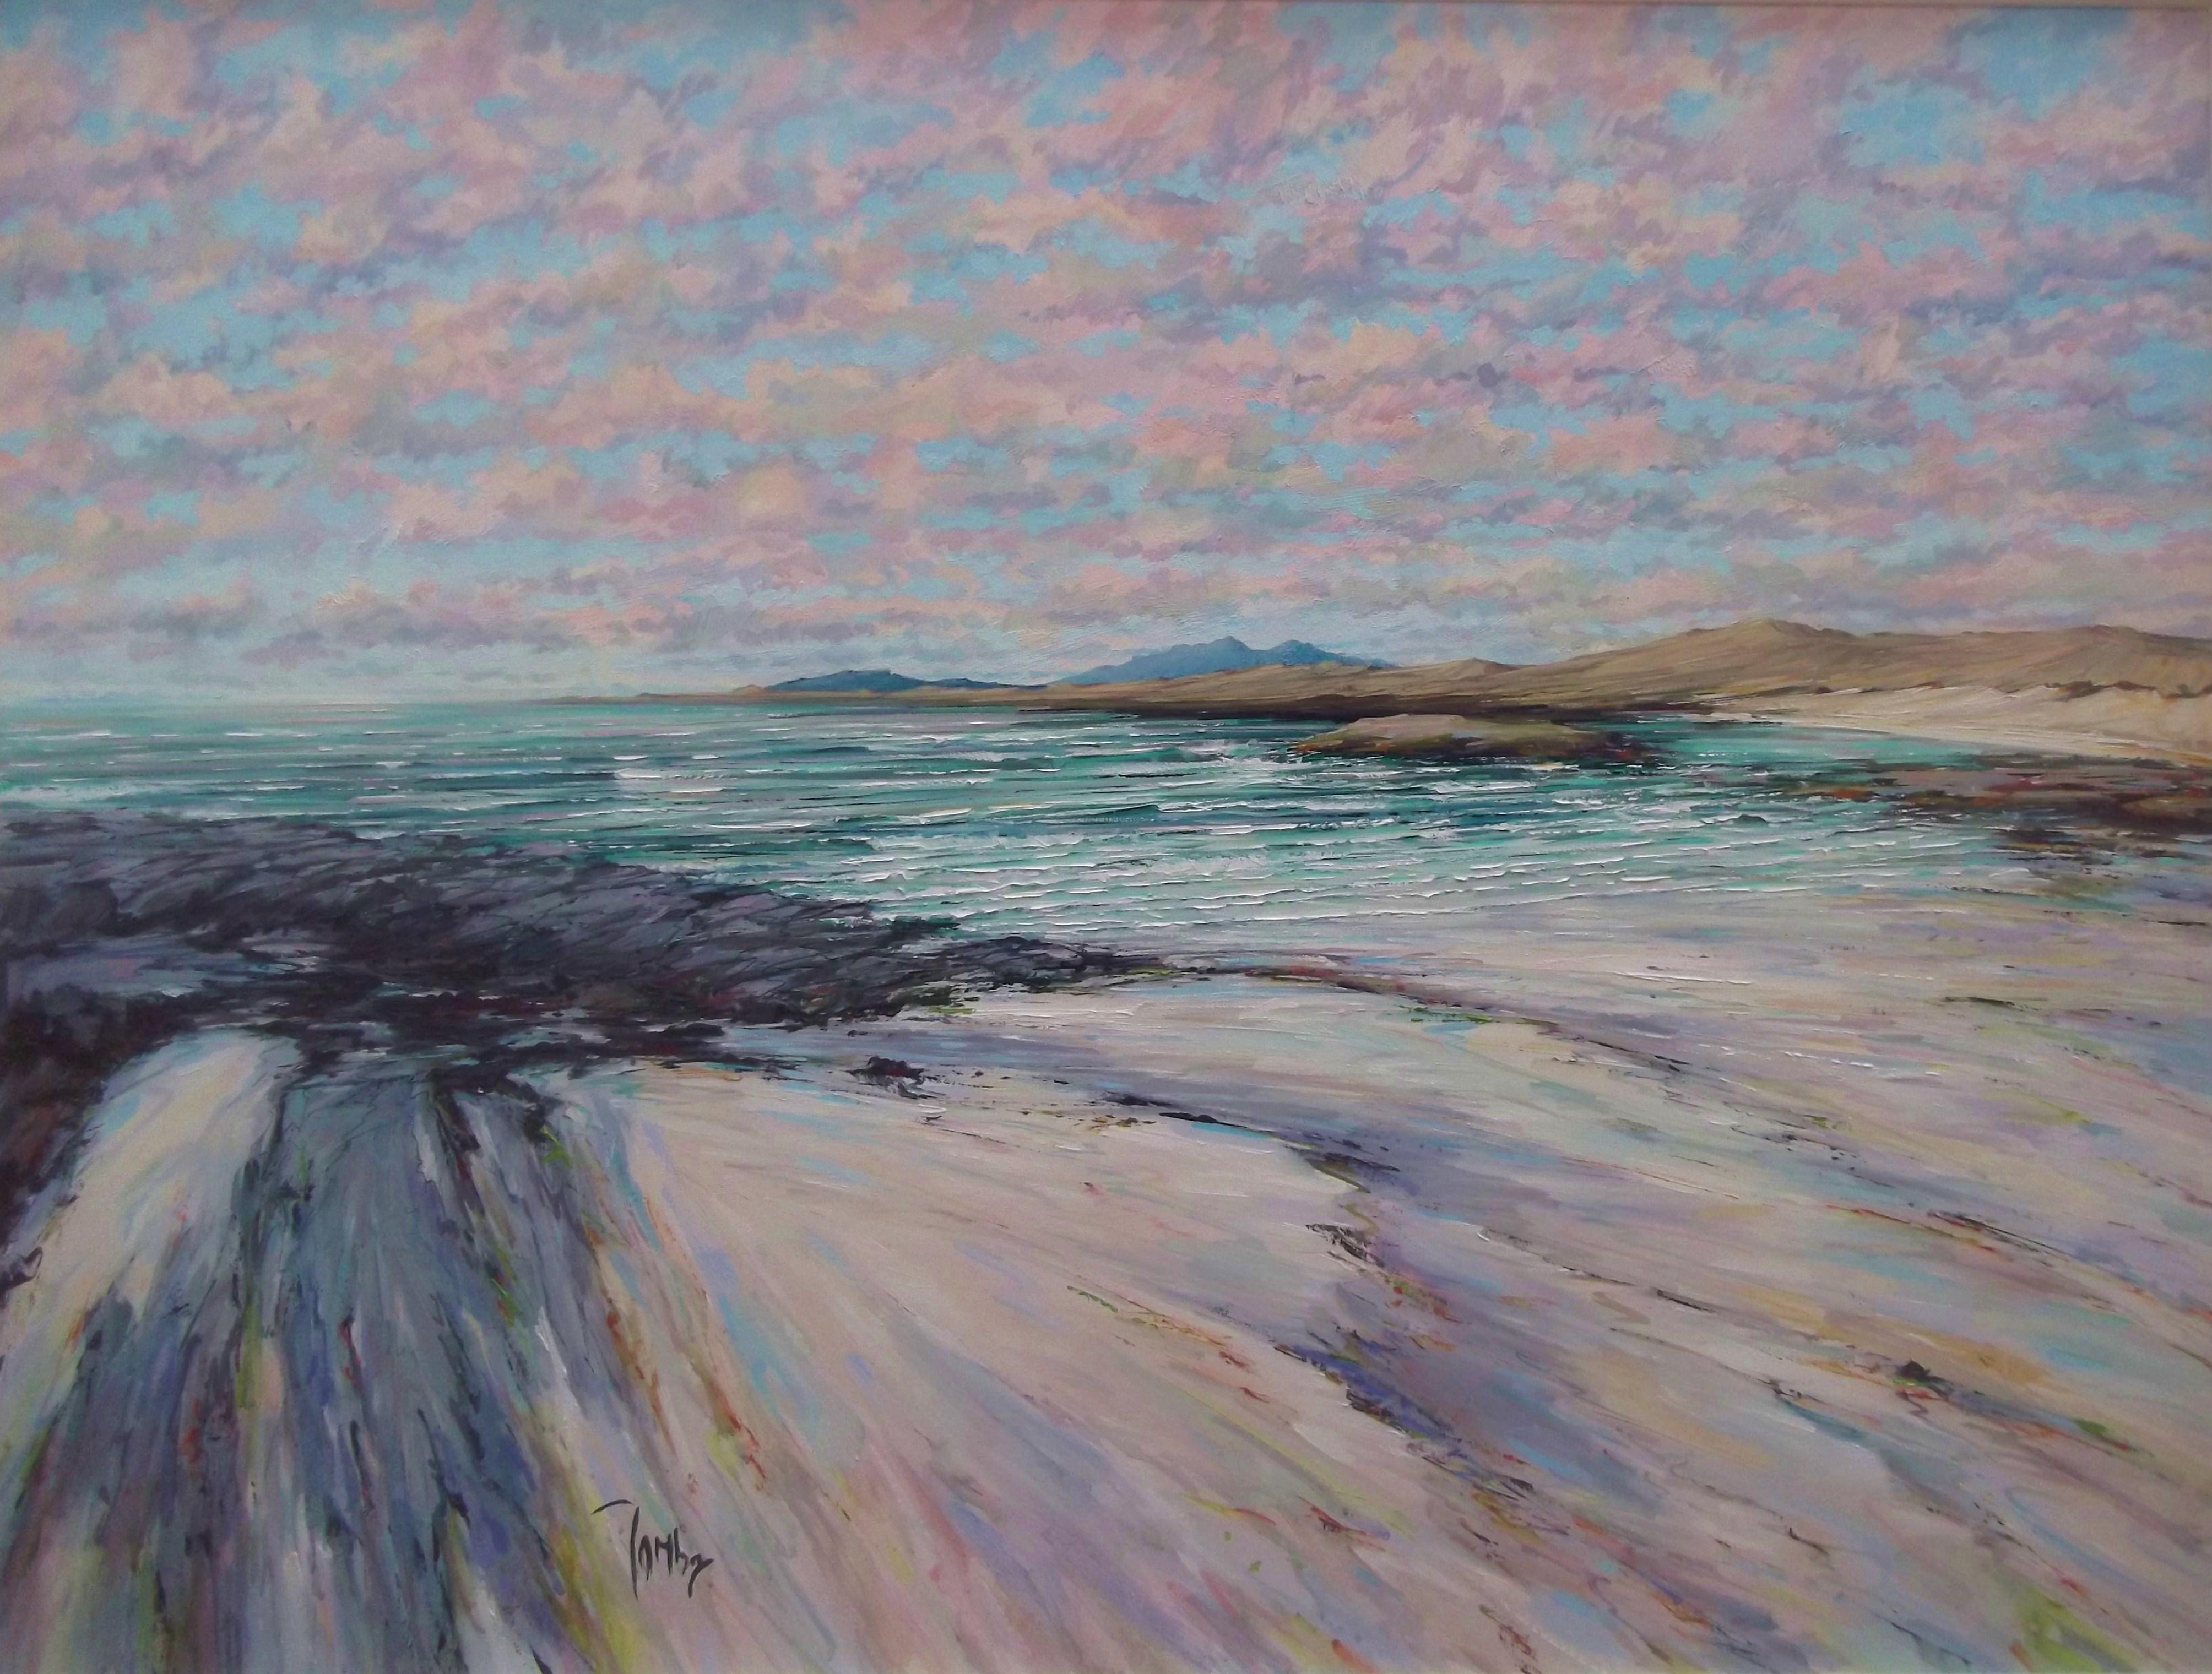 Tom Barron Landscape Painting - Across the Bay - seascape landscape beach painting oil coastal modern abstract